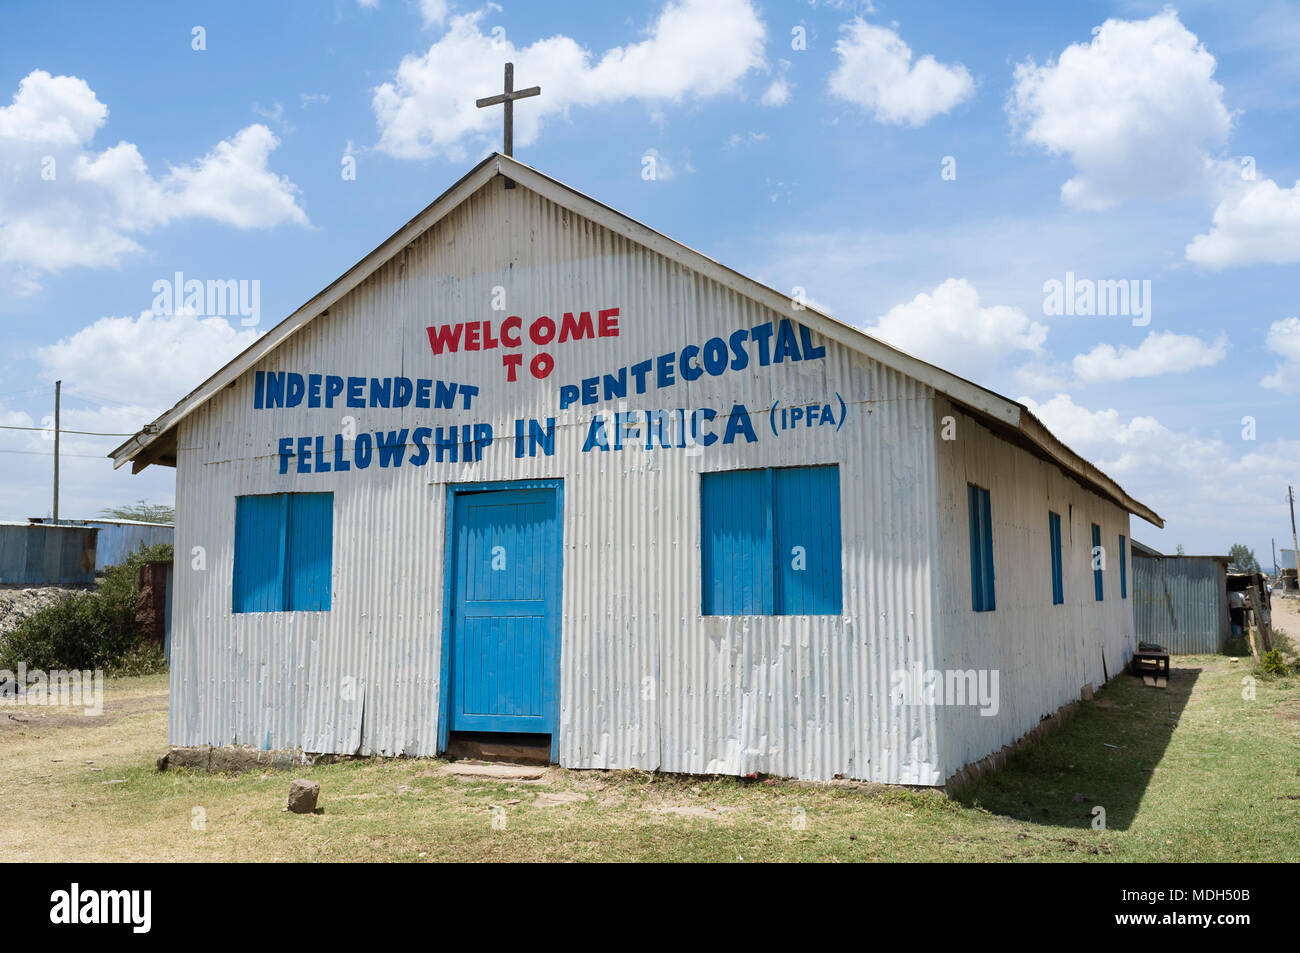 Indipendenti Comunione Pentecostale in Africa la Chiesa, Ngong Road, Nairobi, Kenia Foto Stock